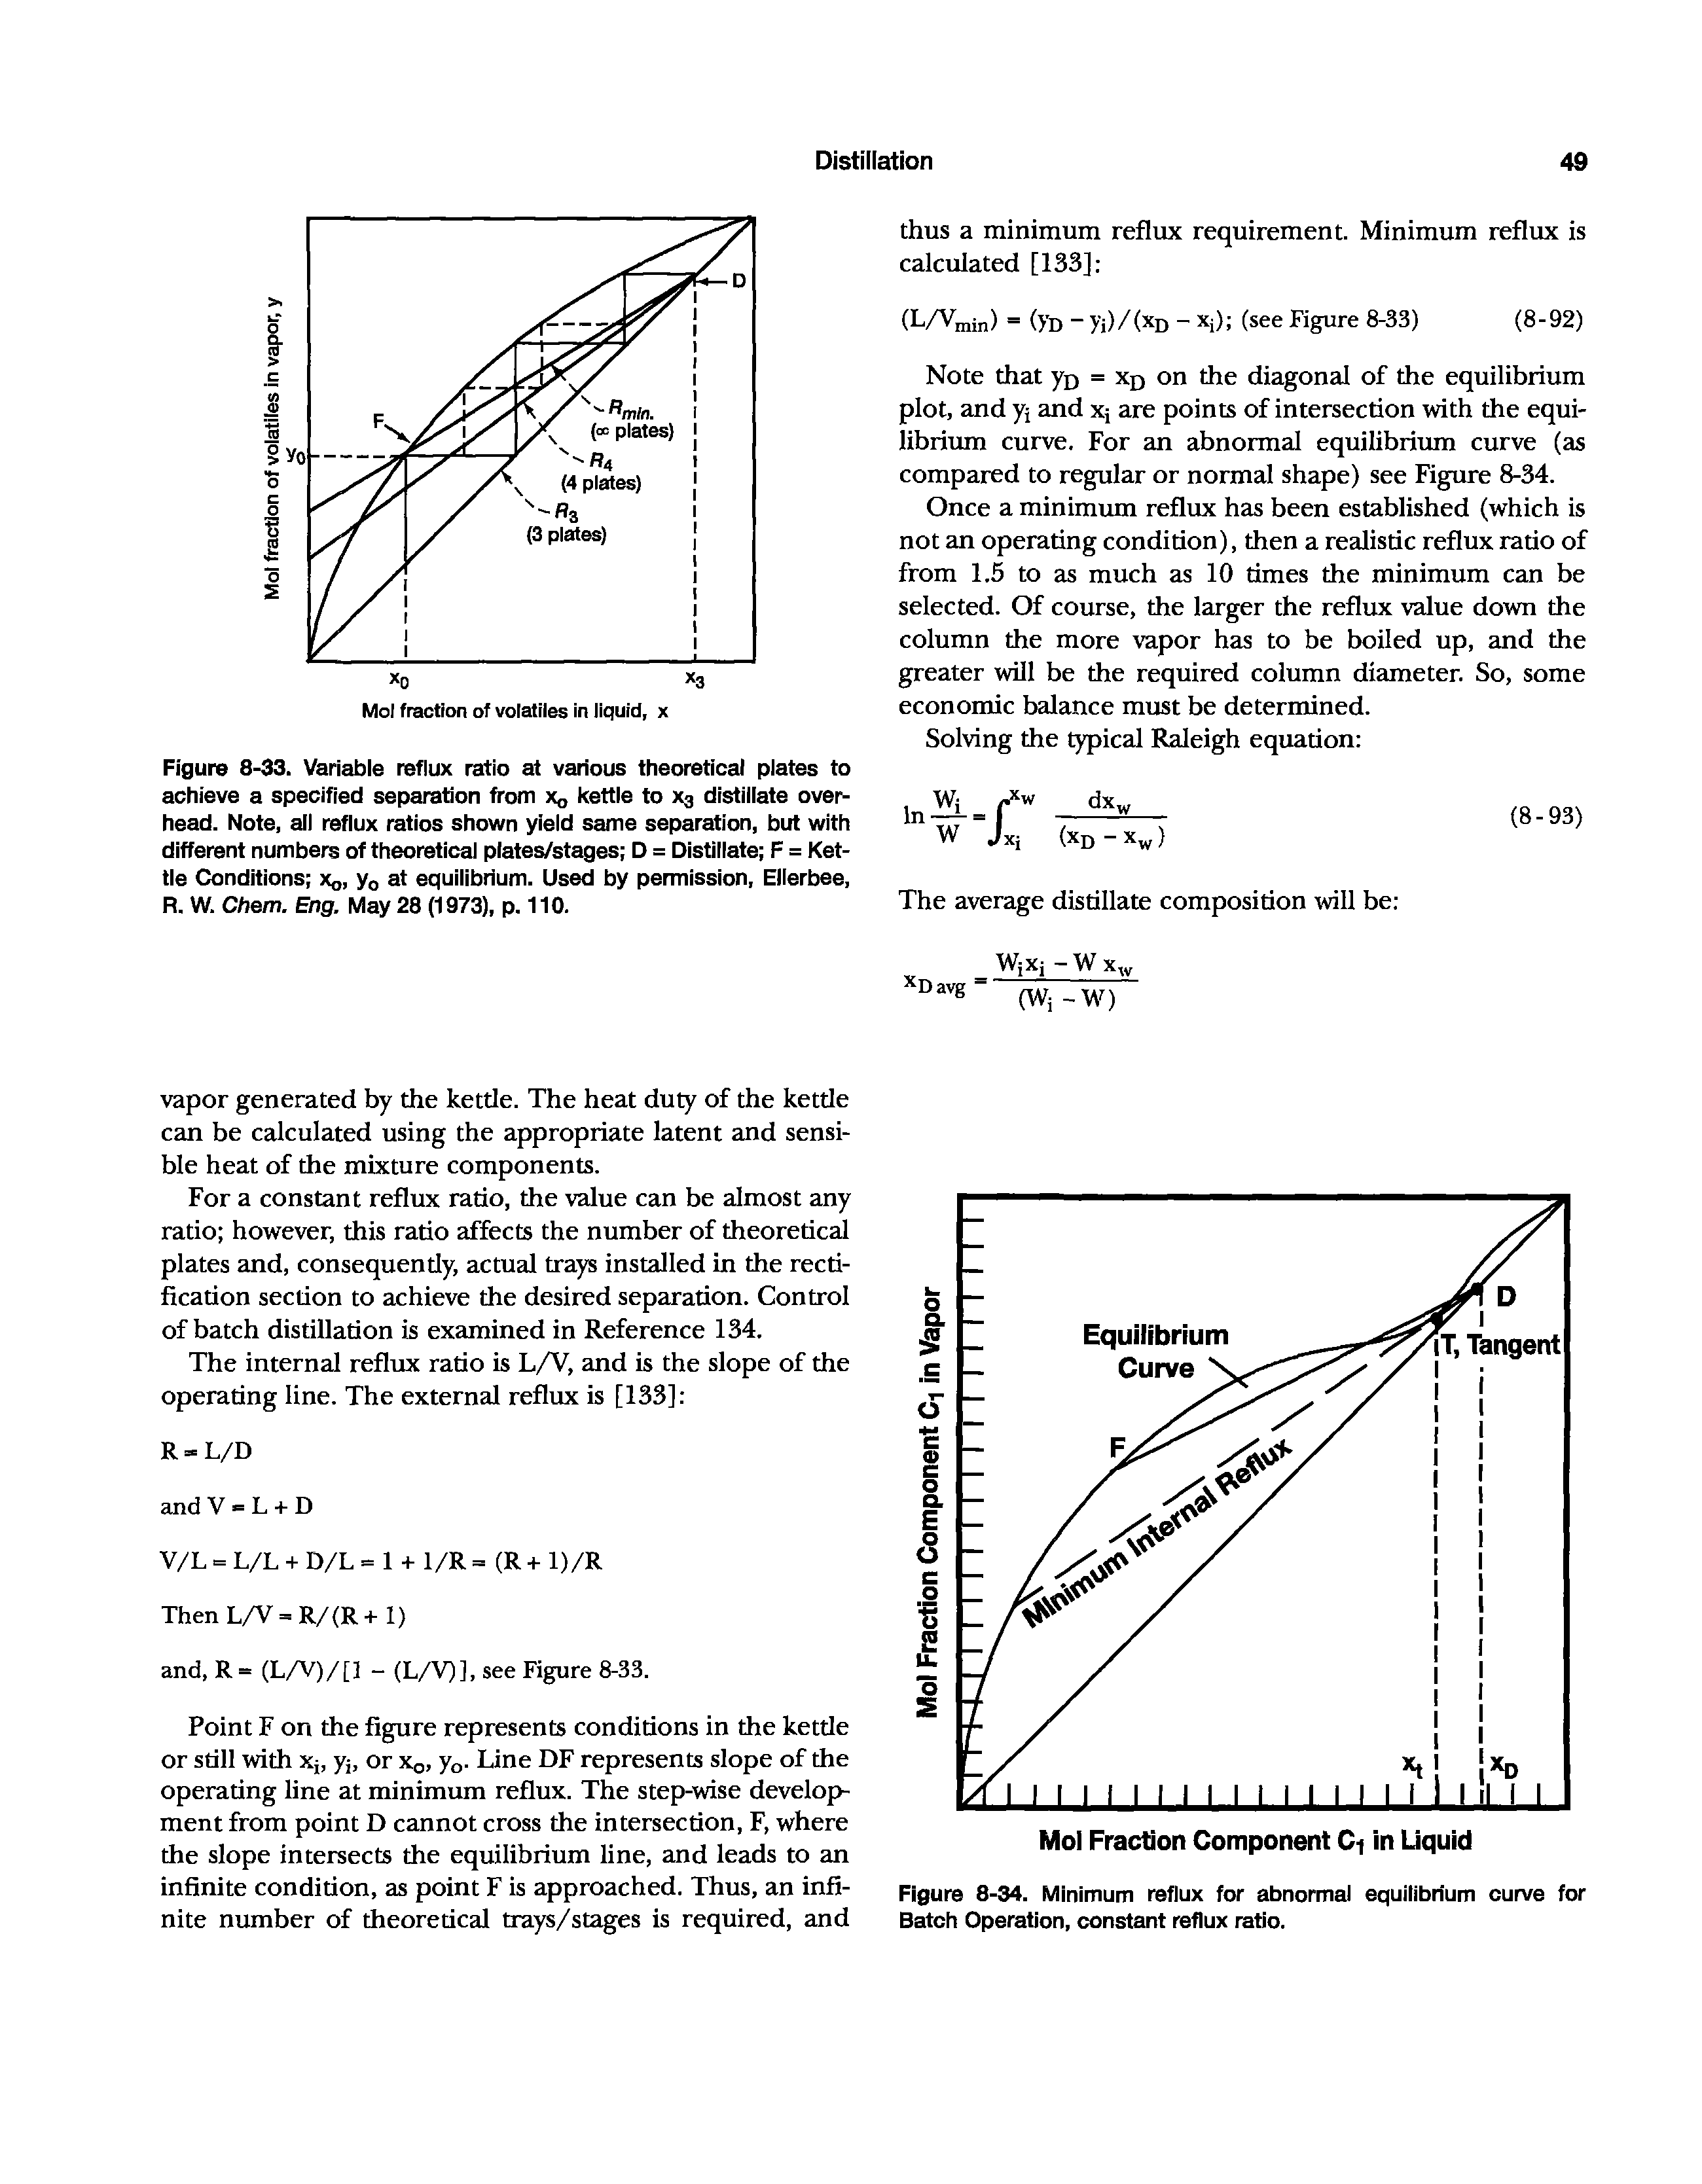 Figure 8-34. Minimum reflux for abnormal equilibrium curve for Batch Operation, constant reflux ratio.